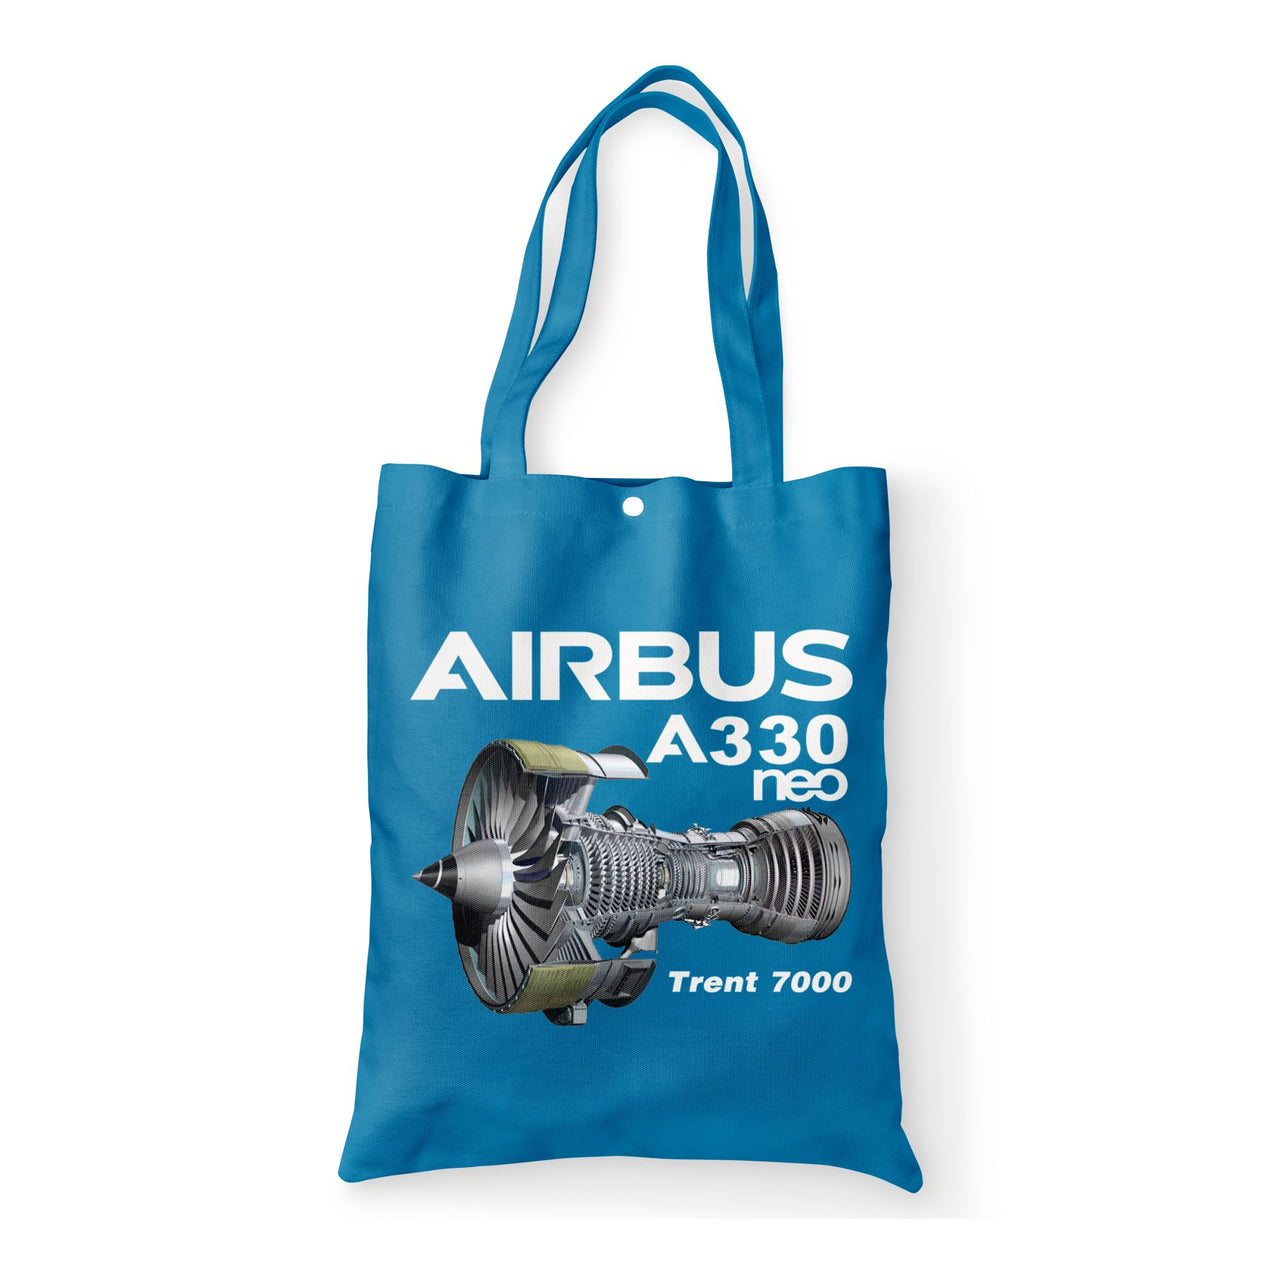 Airbus A330neo & Trent 7000 Designed Tote Bags